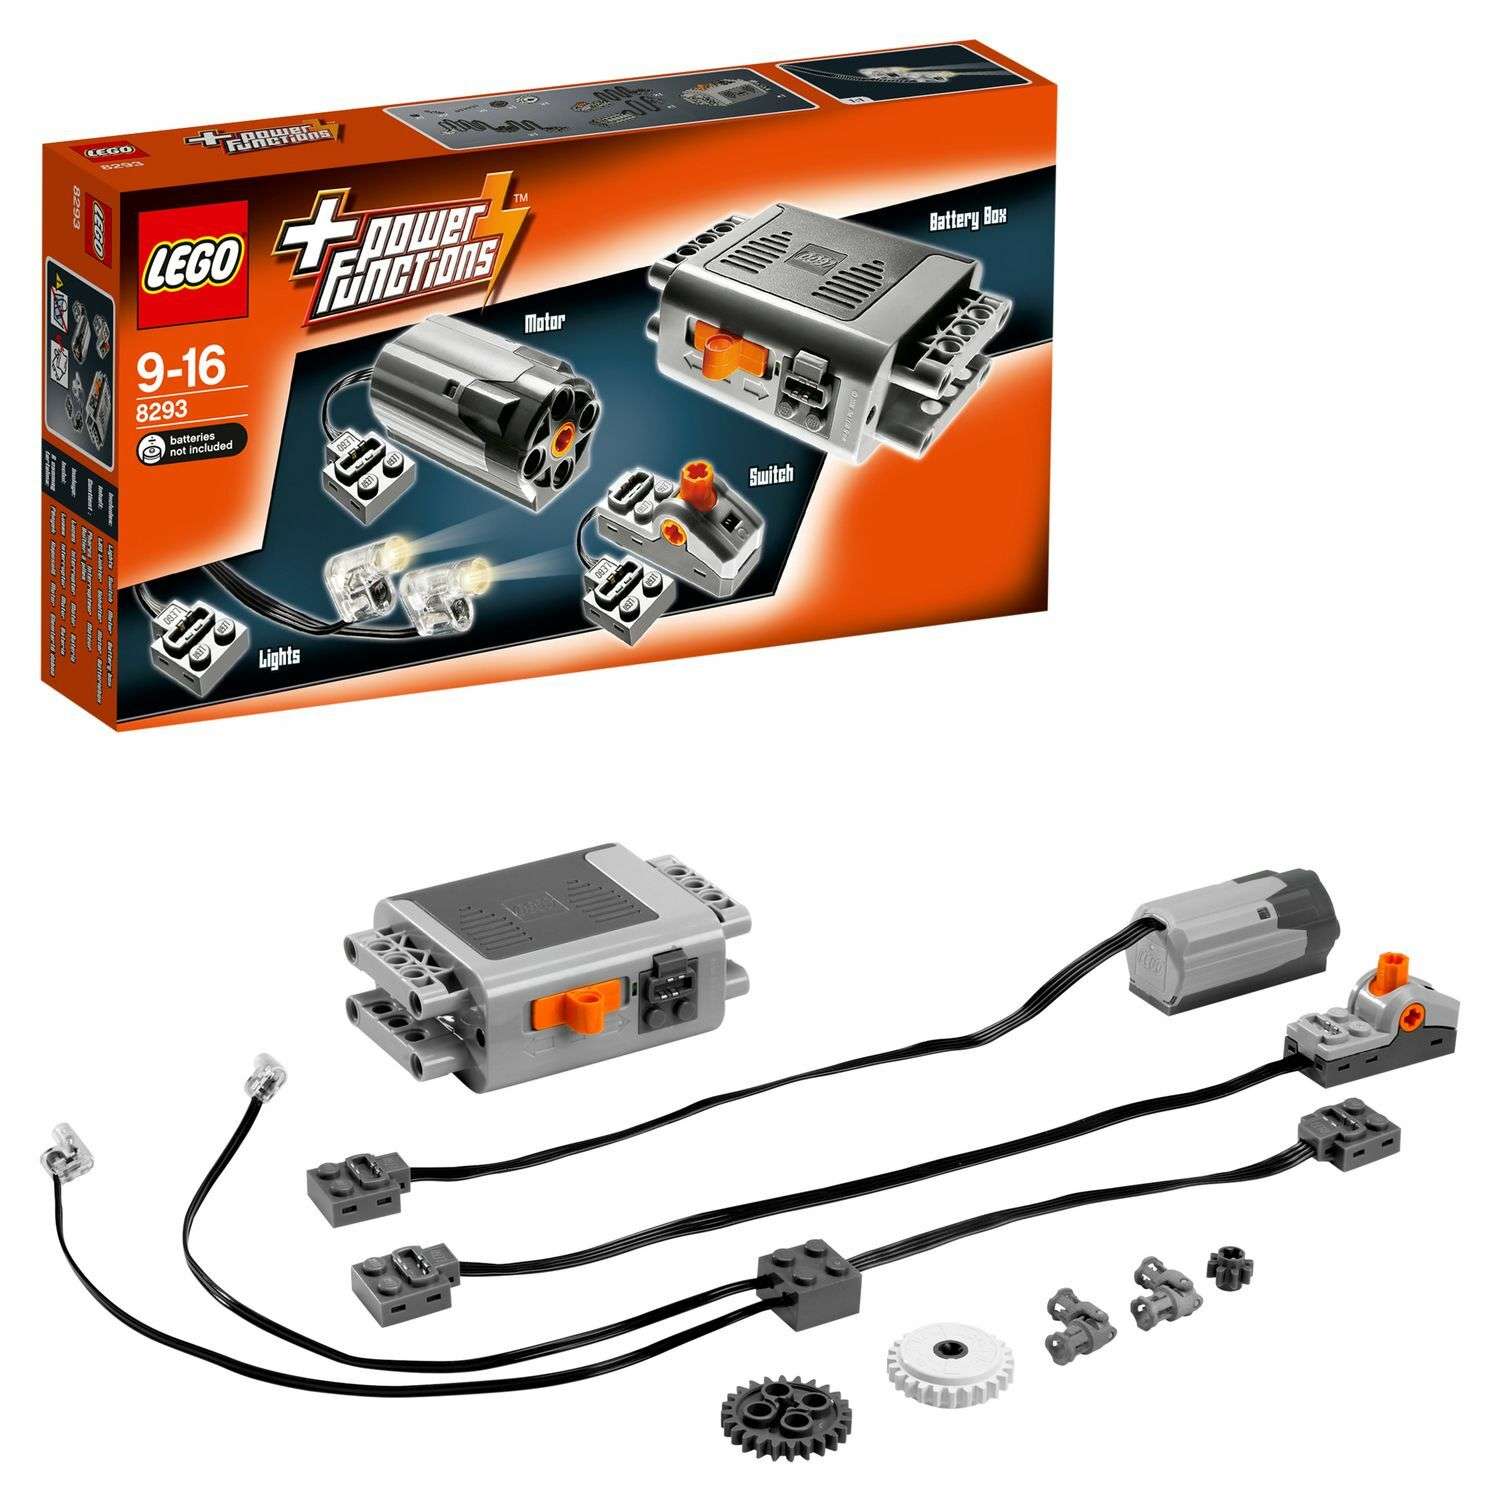 Конструктор LEGO Technic Набор с мотором Power Functions (8293) - фото 1